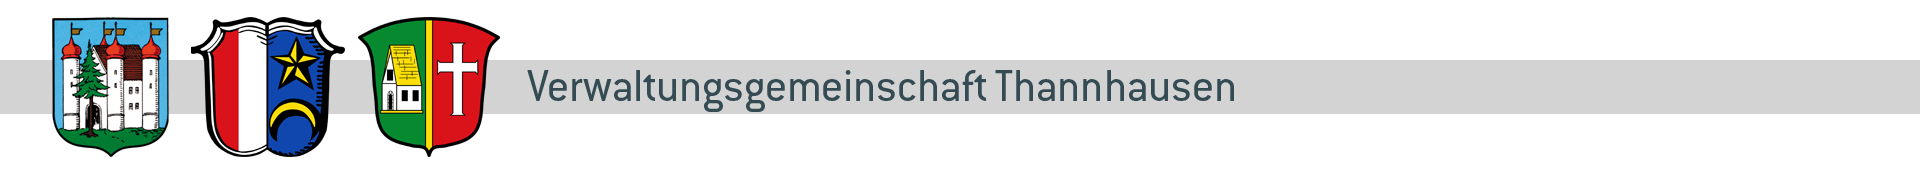 Verwaltungsgemeinschaft Thannhausen